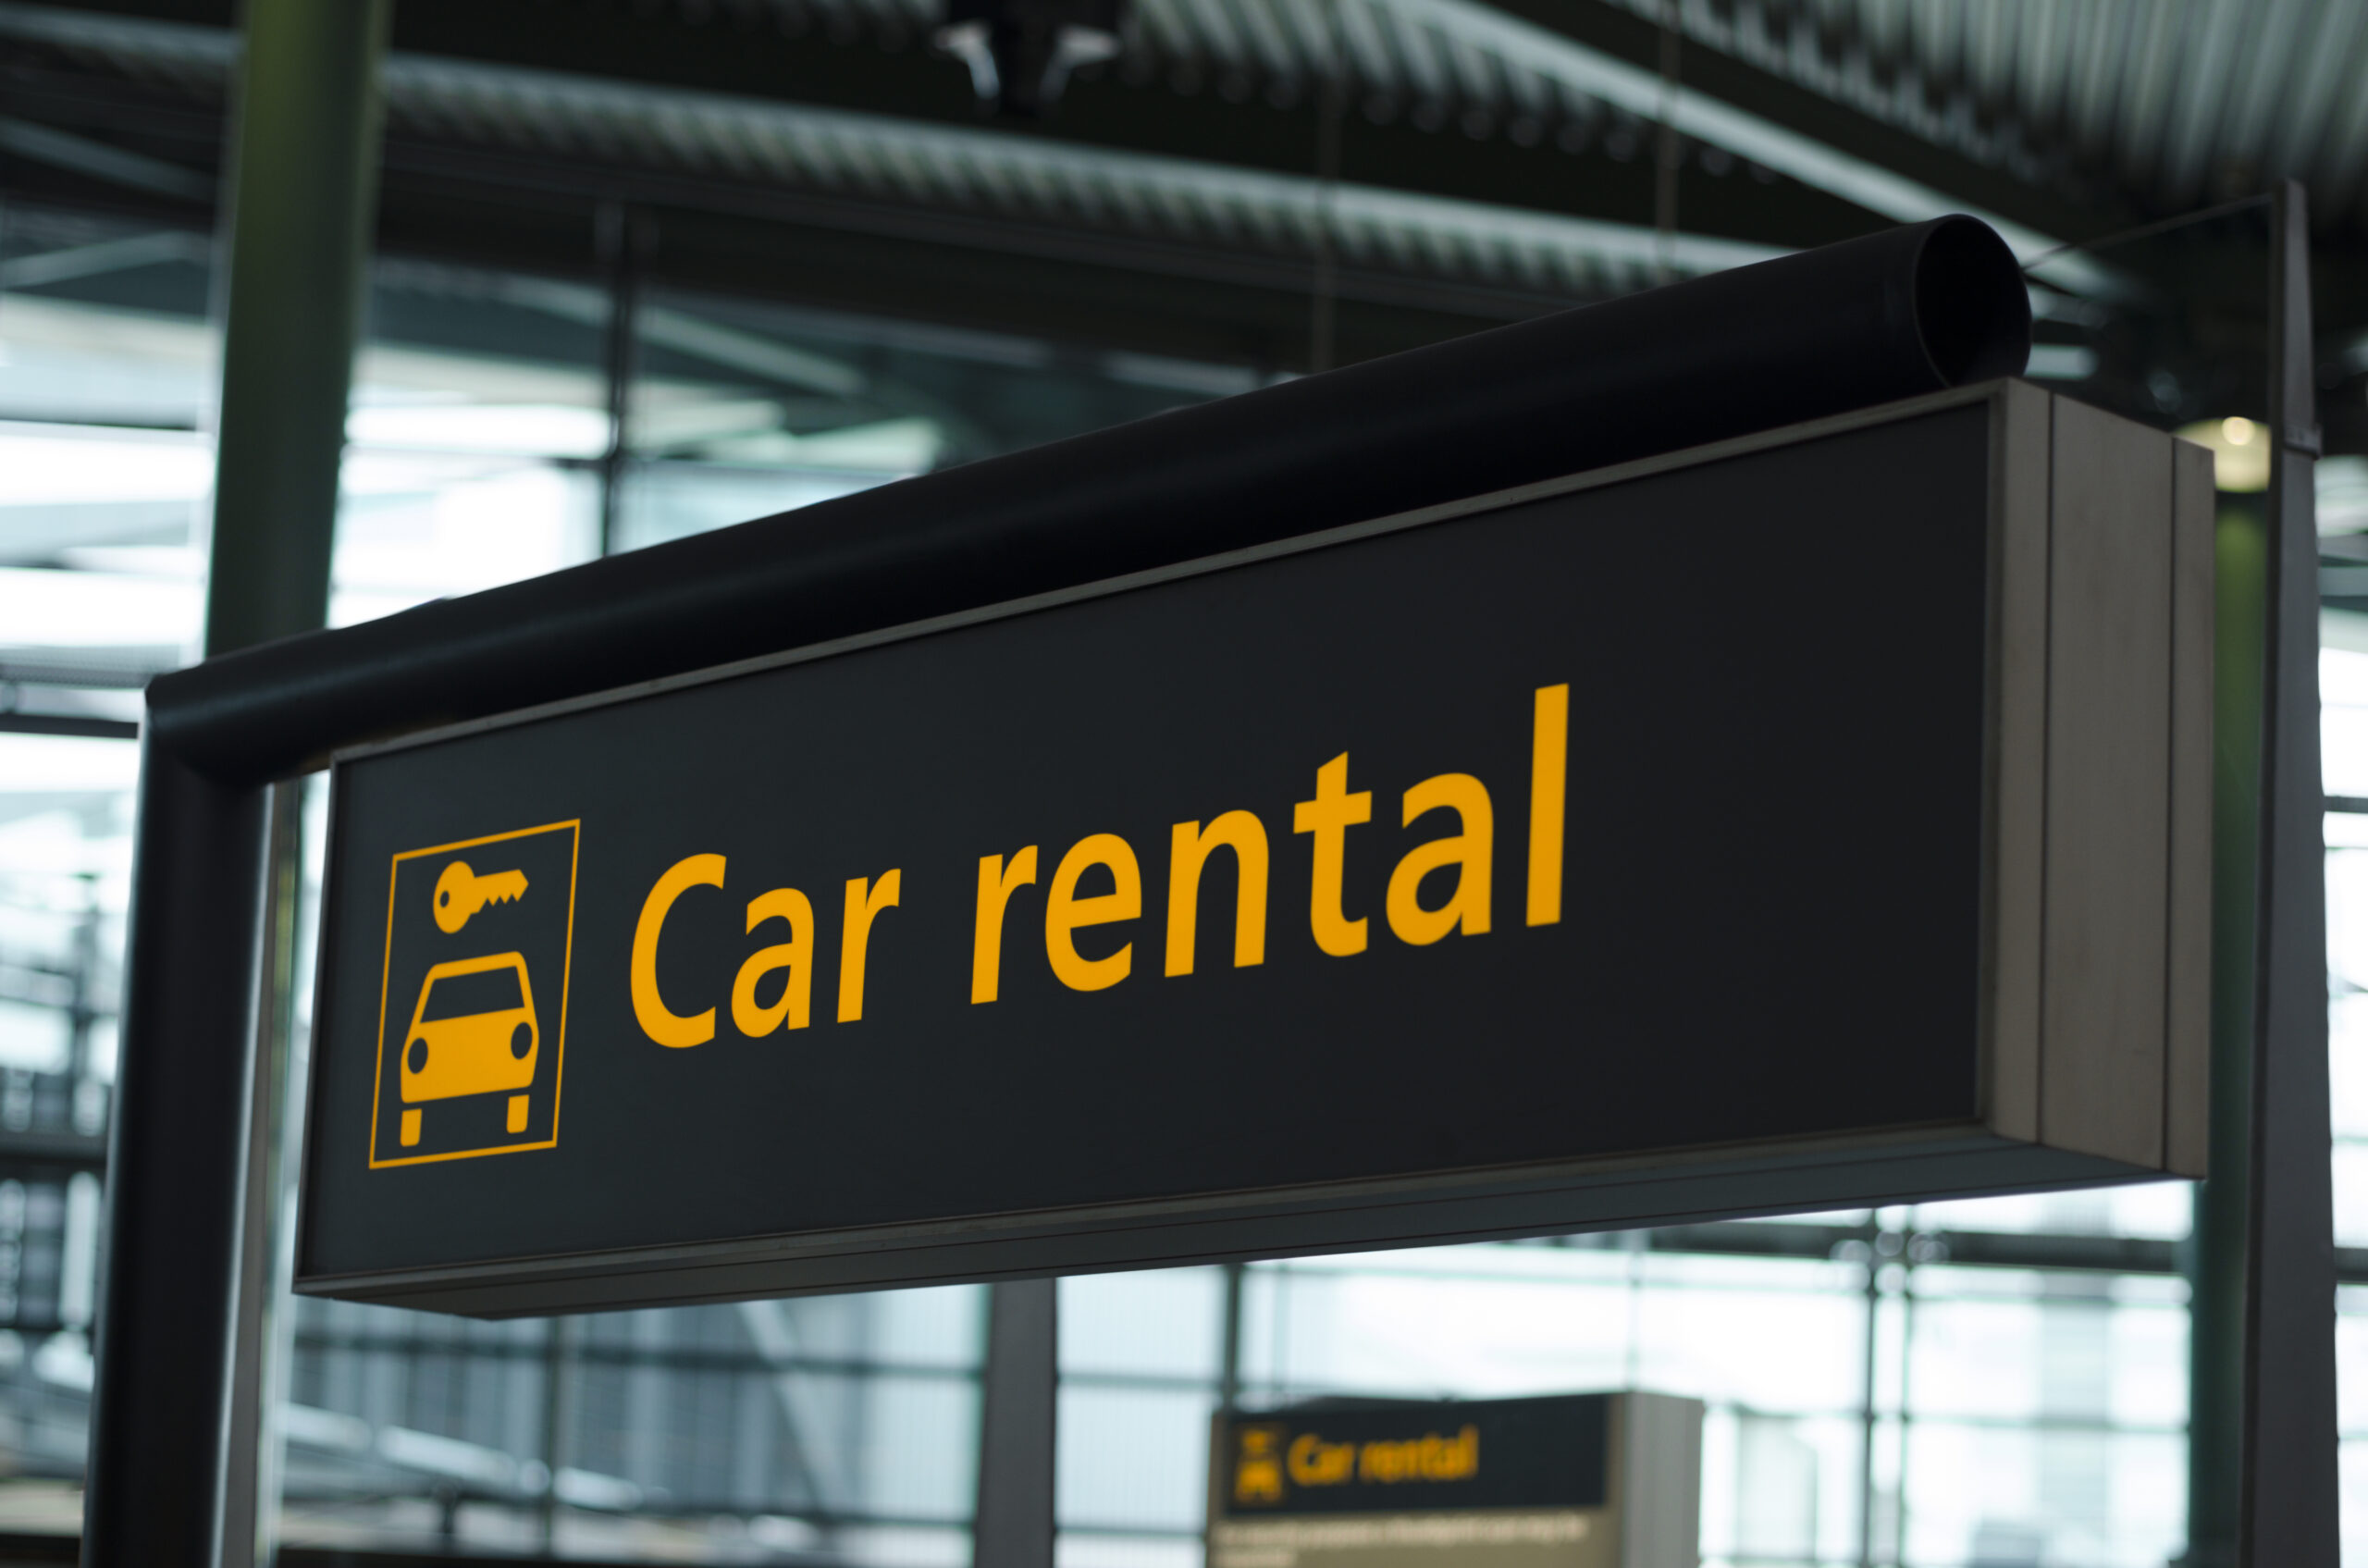 Rent a car in Dubai - Airport sign